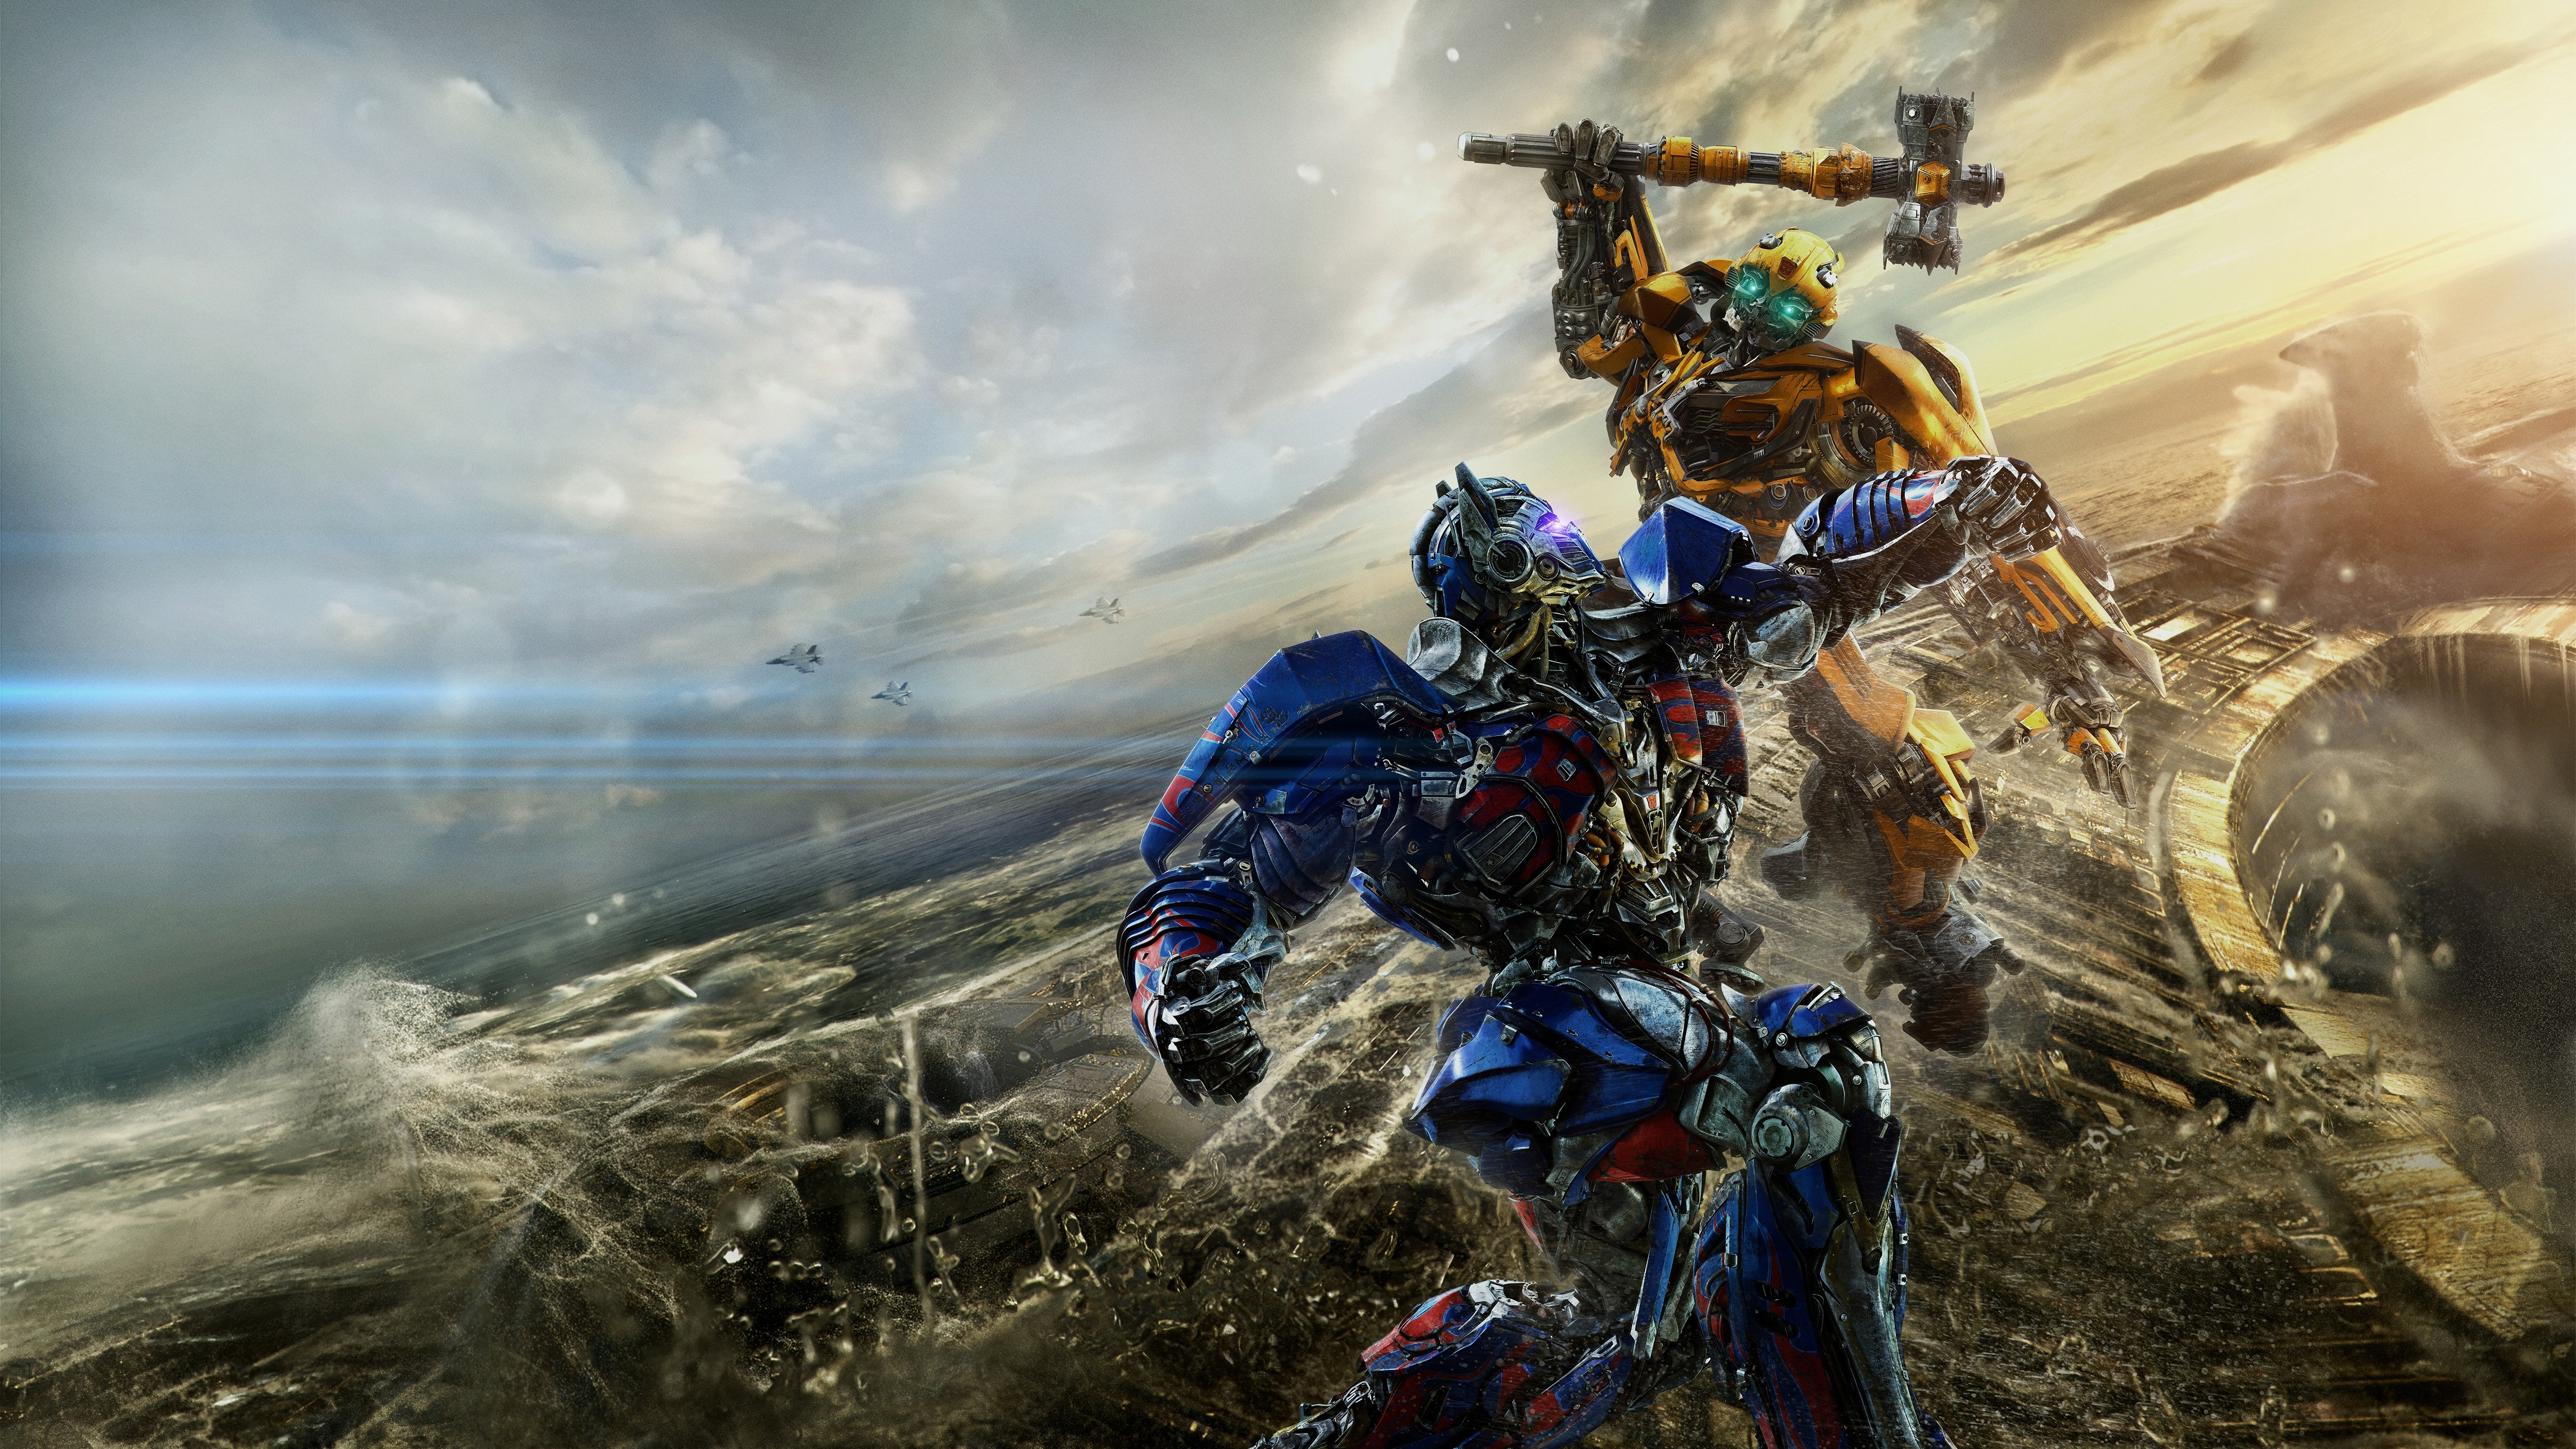 10 New Transformers The Last Knight Wallpaper FULL HD 1080p For PC Desktop